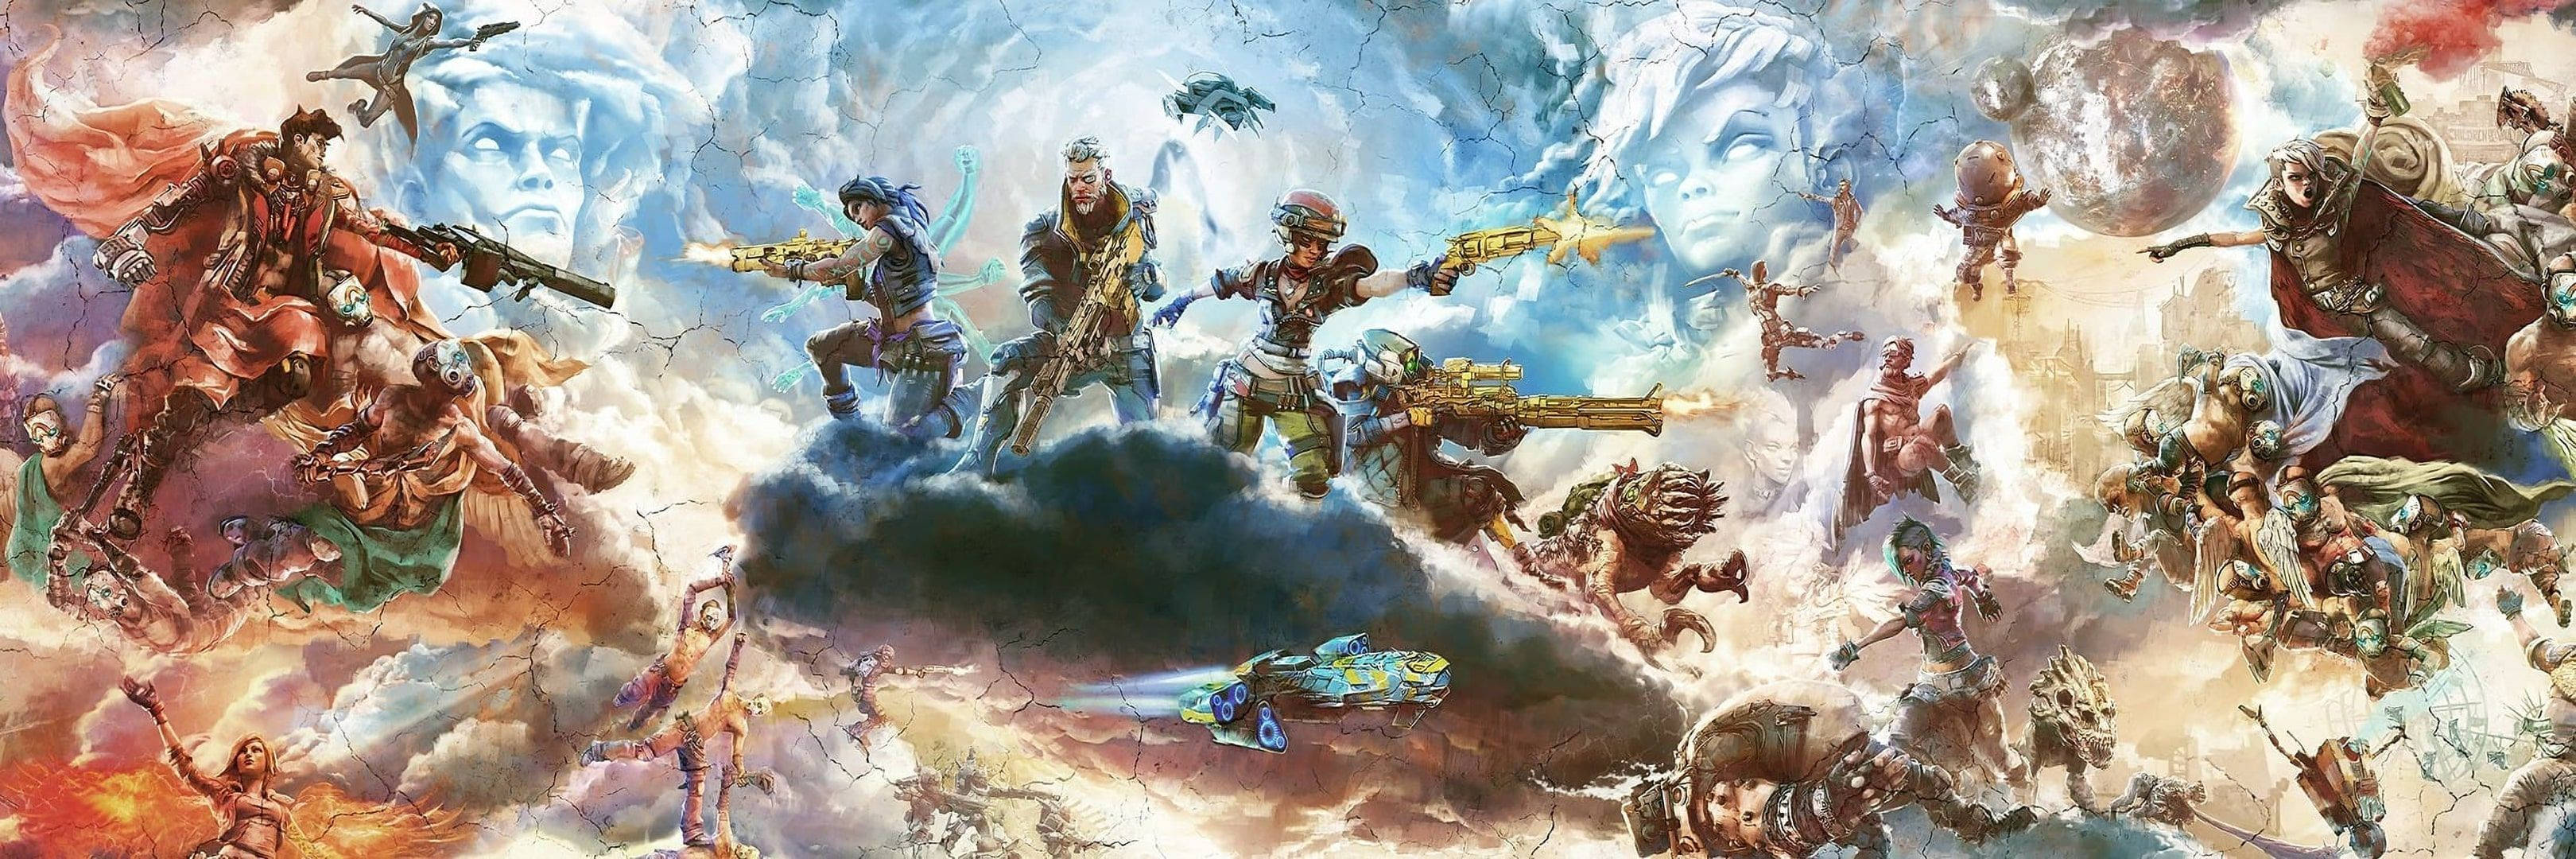 Borderlands 3 Game Cover Wallpaper